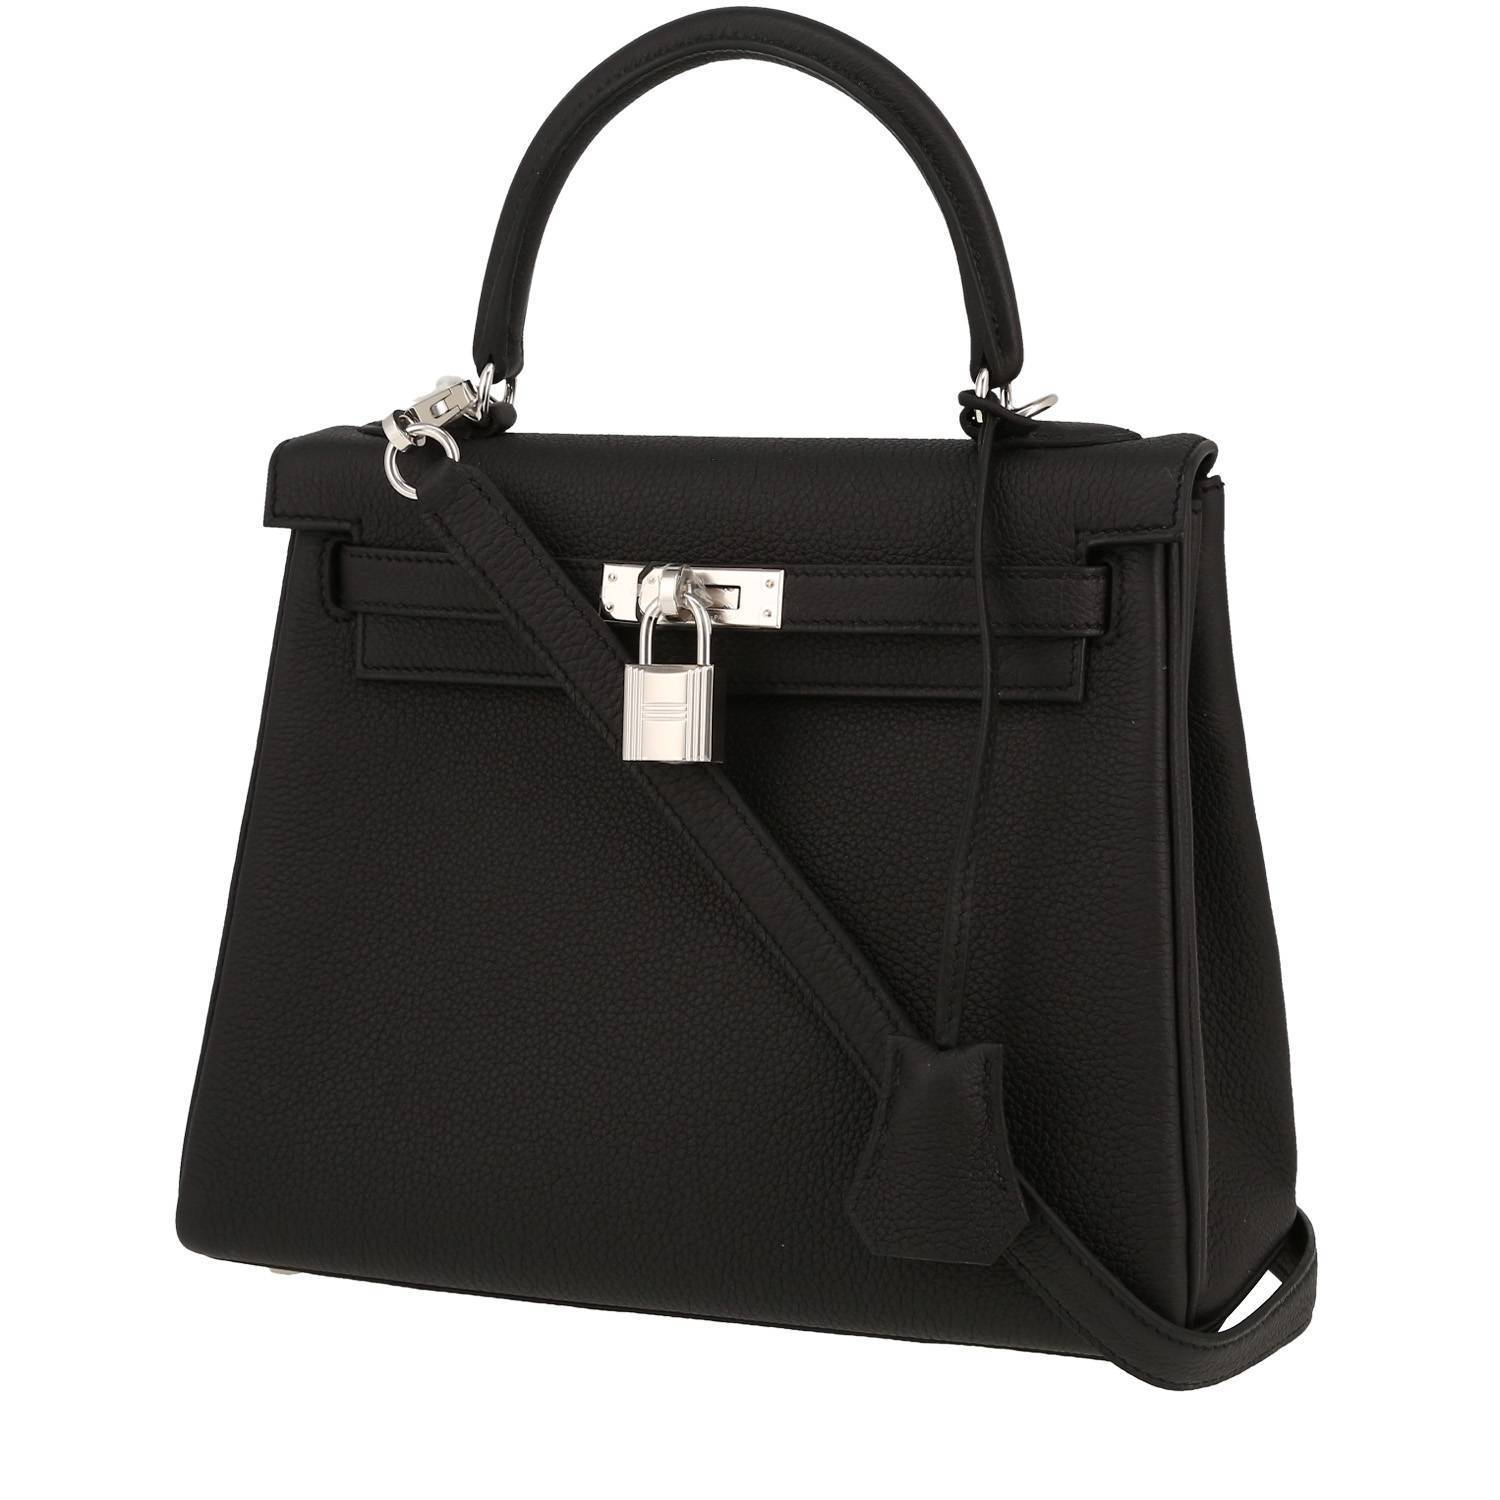 Kelly 25 cm Handbag In Black Togo Leather